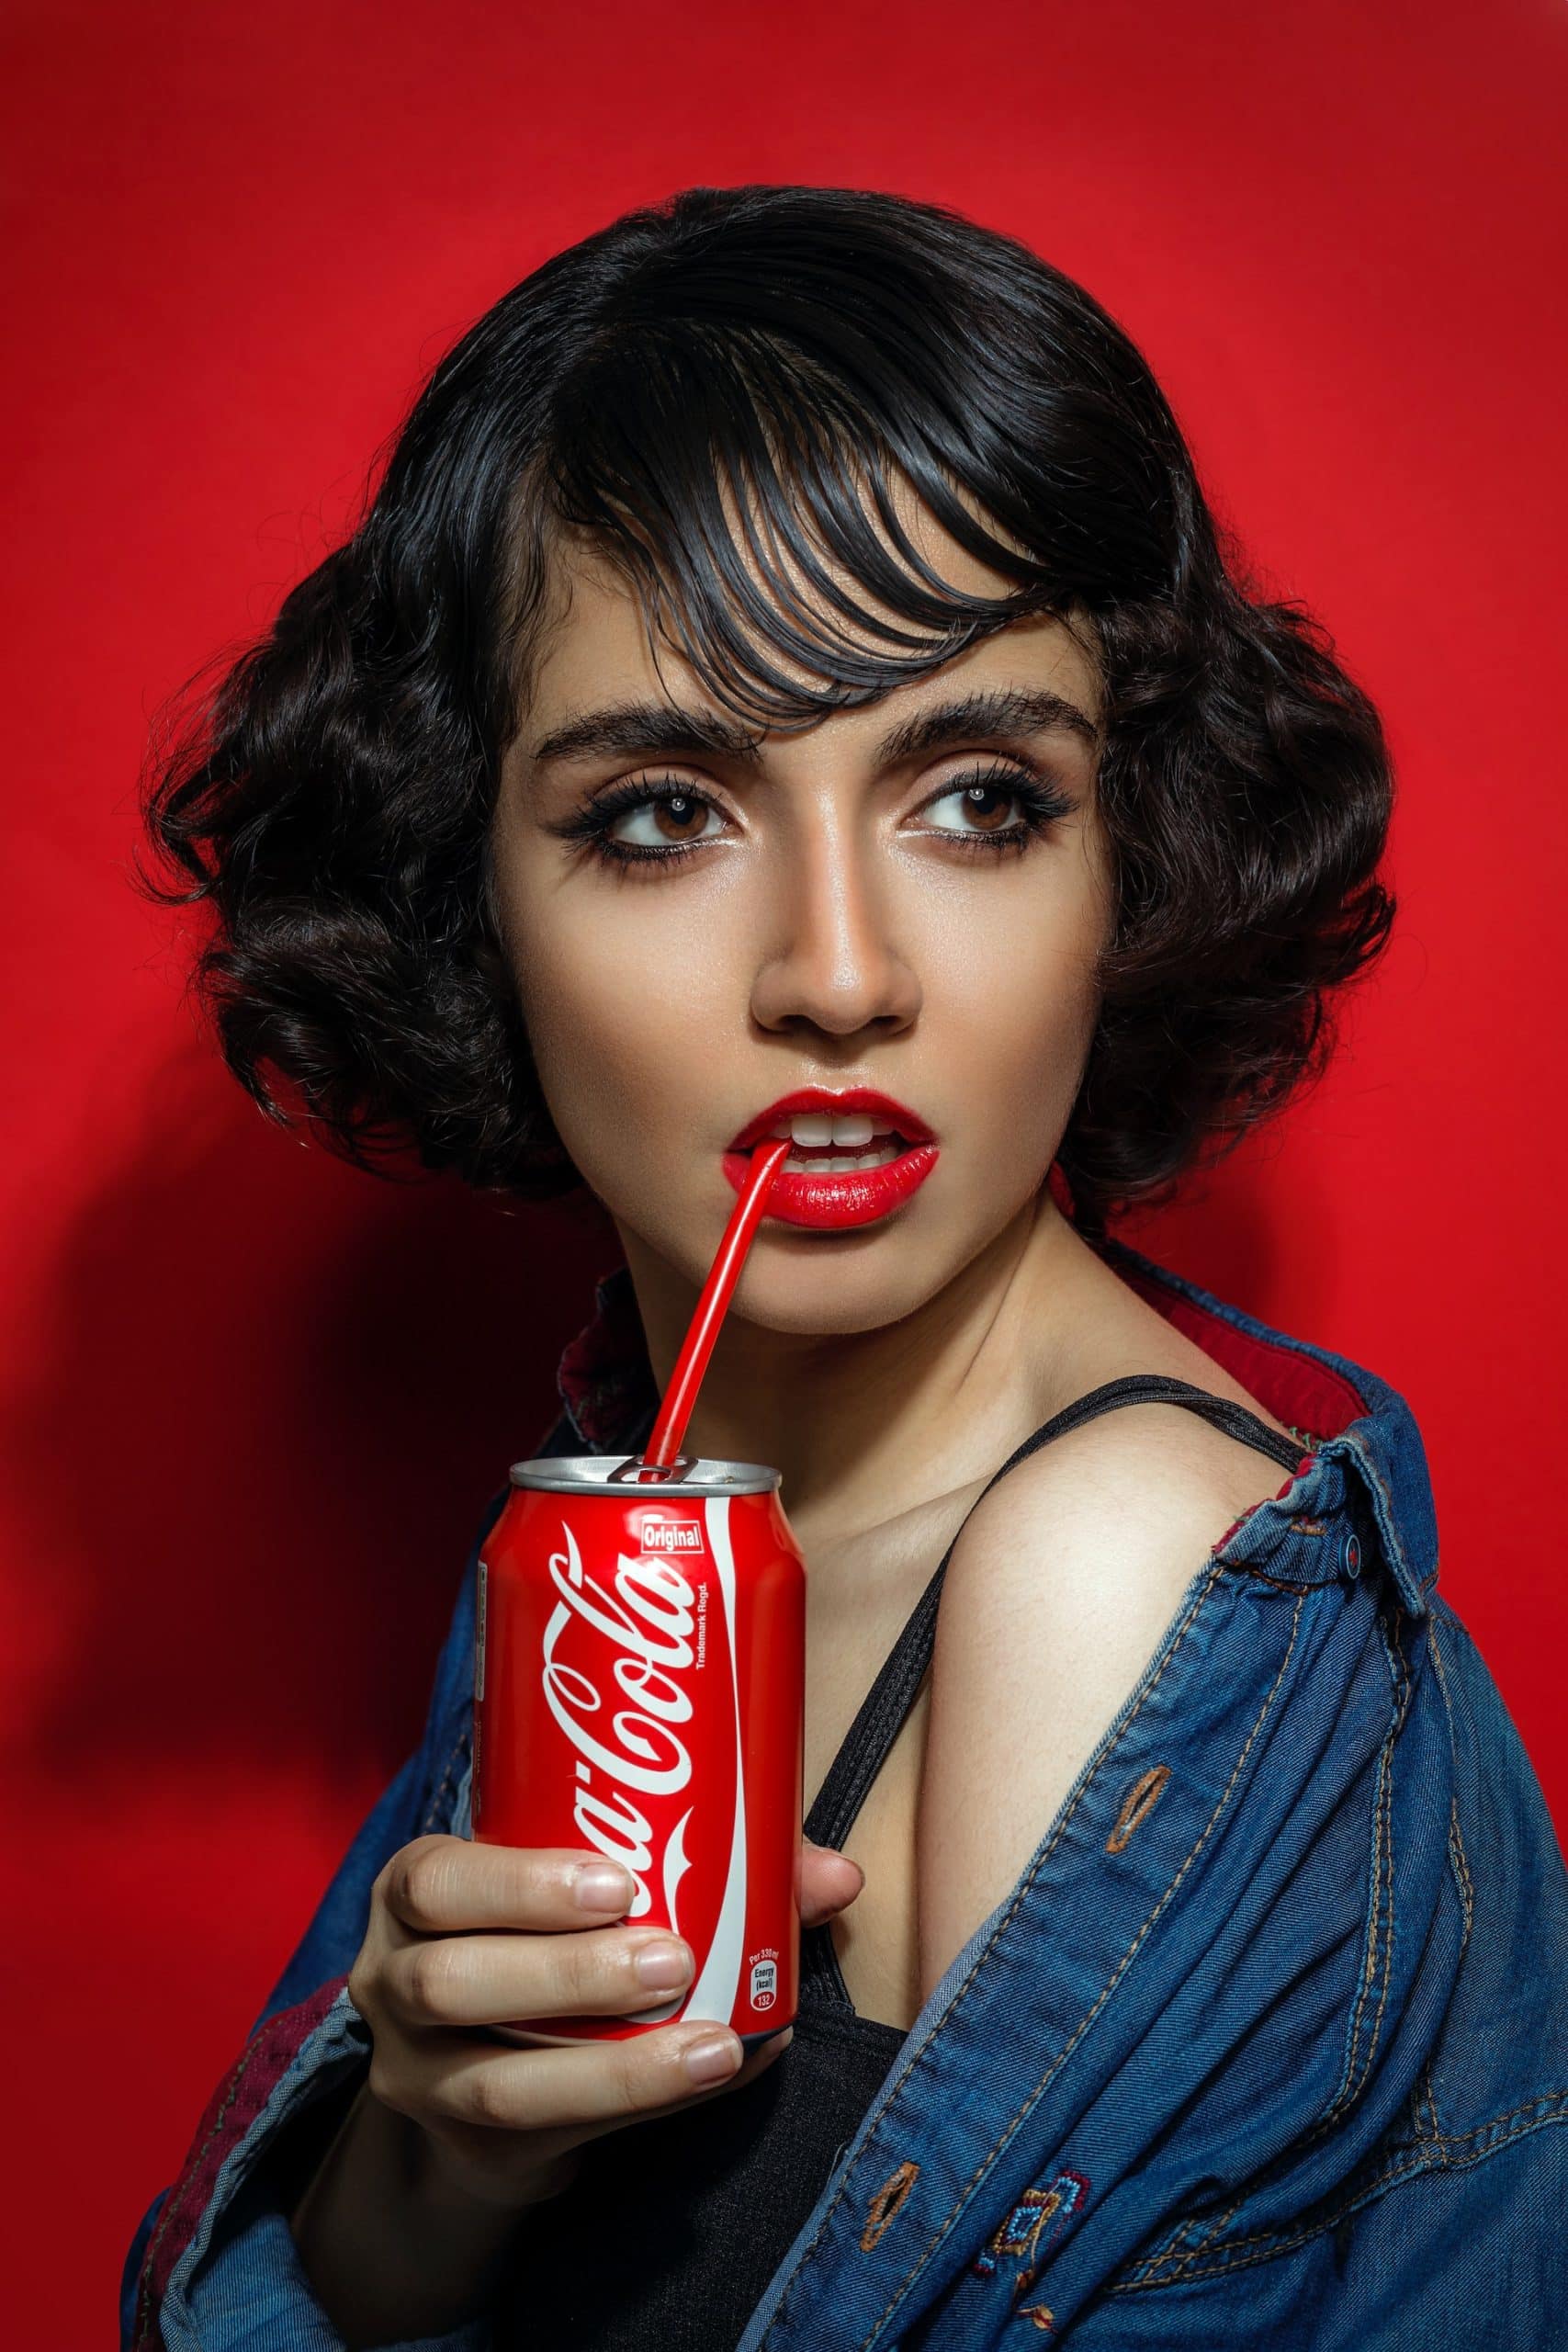 Coca-cola merkevarebygging langsiktig strategi 